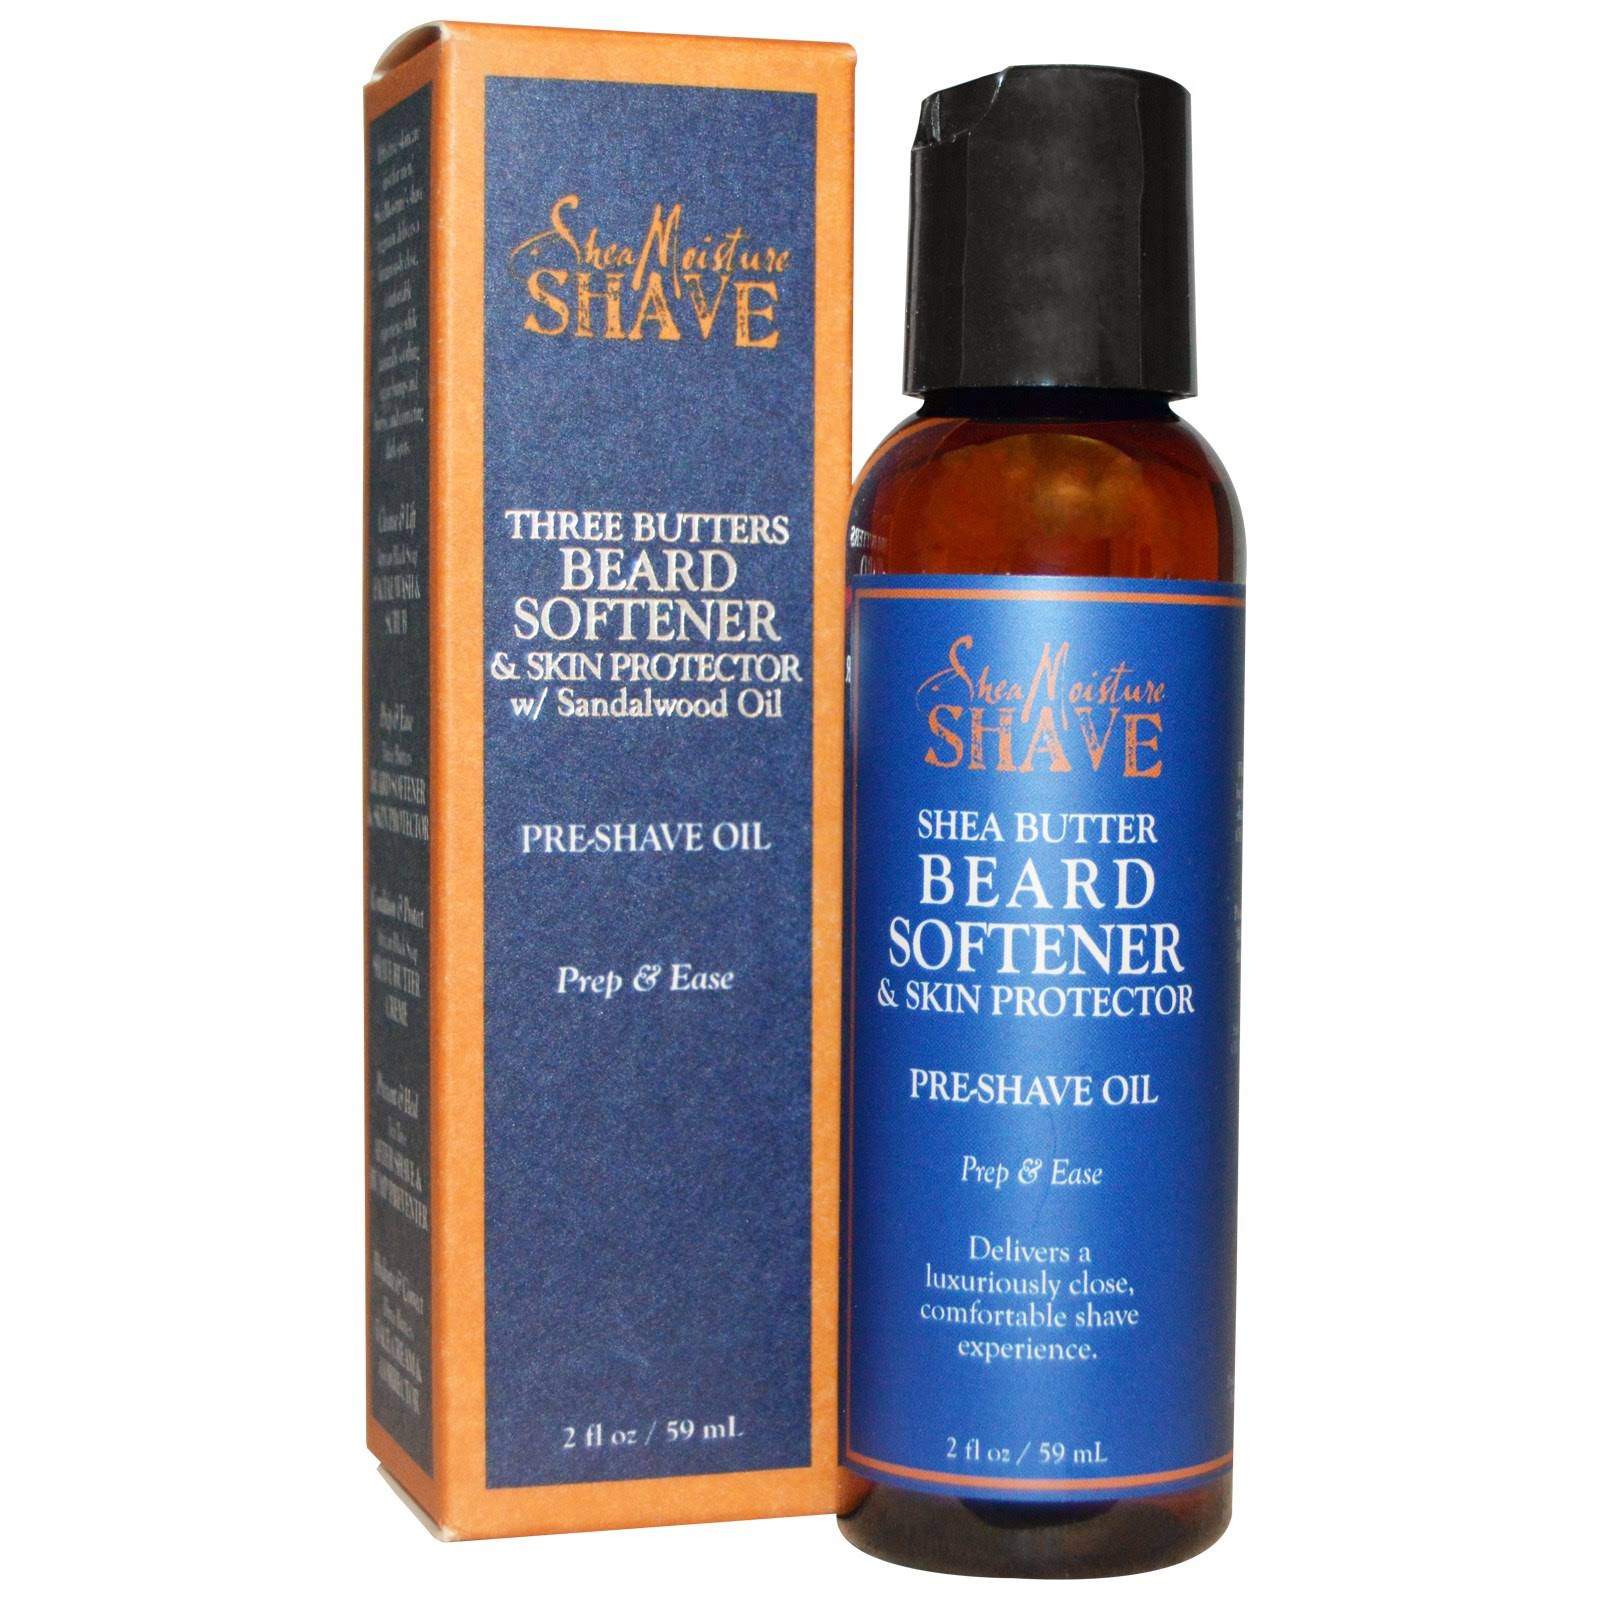 SheaMoisture Shave Beard Softener & Skin Protector Oil - Shea Butter, 59ml